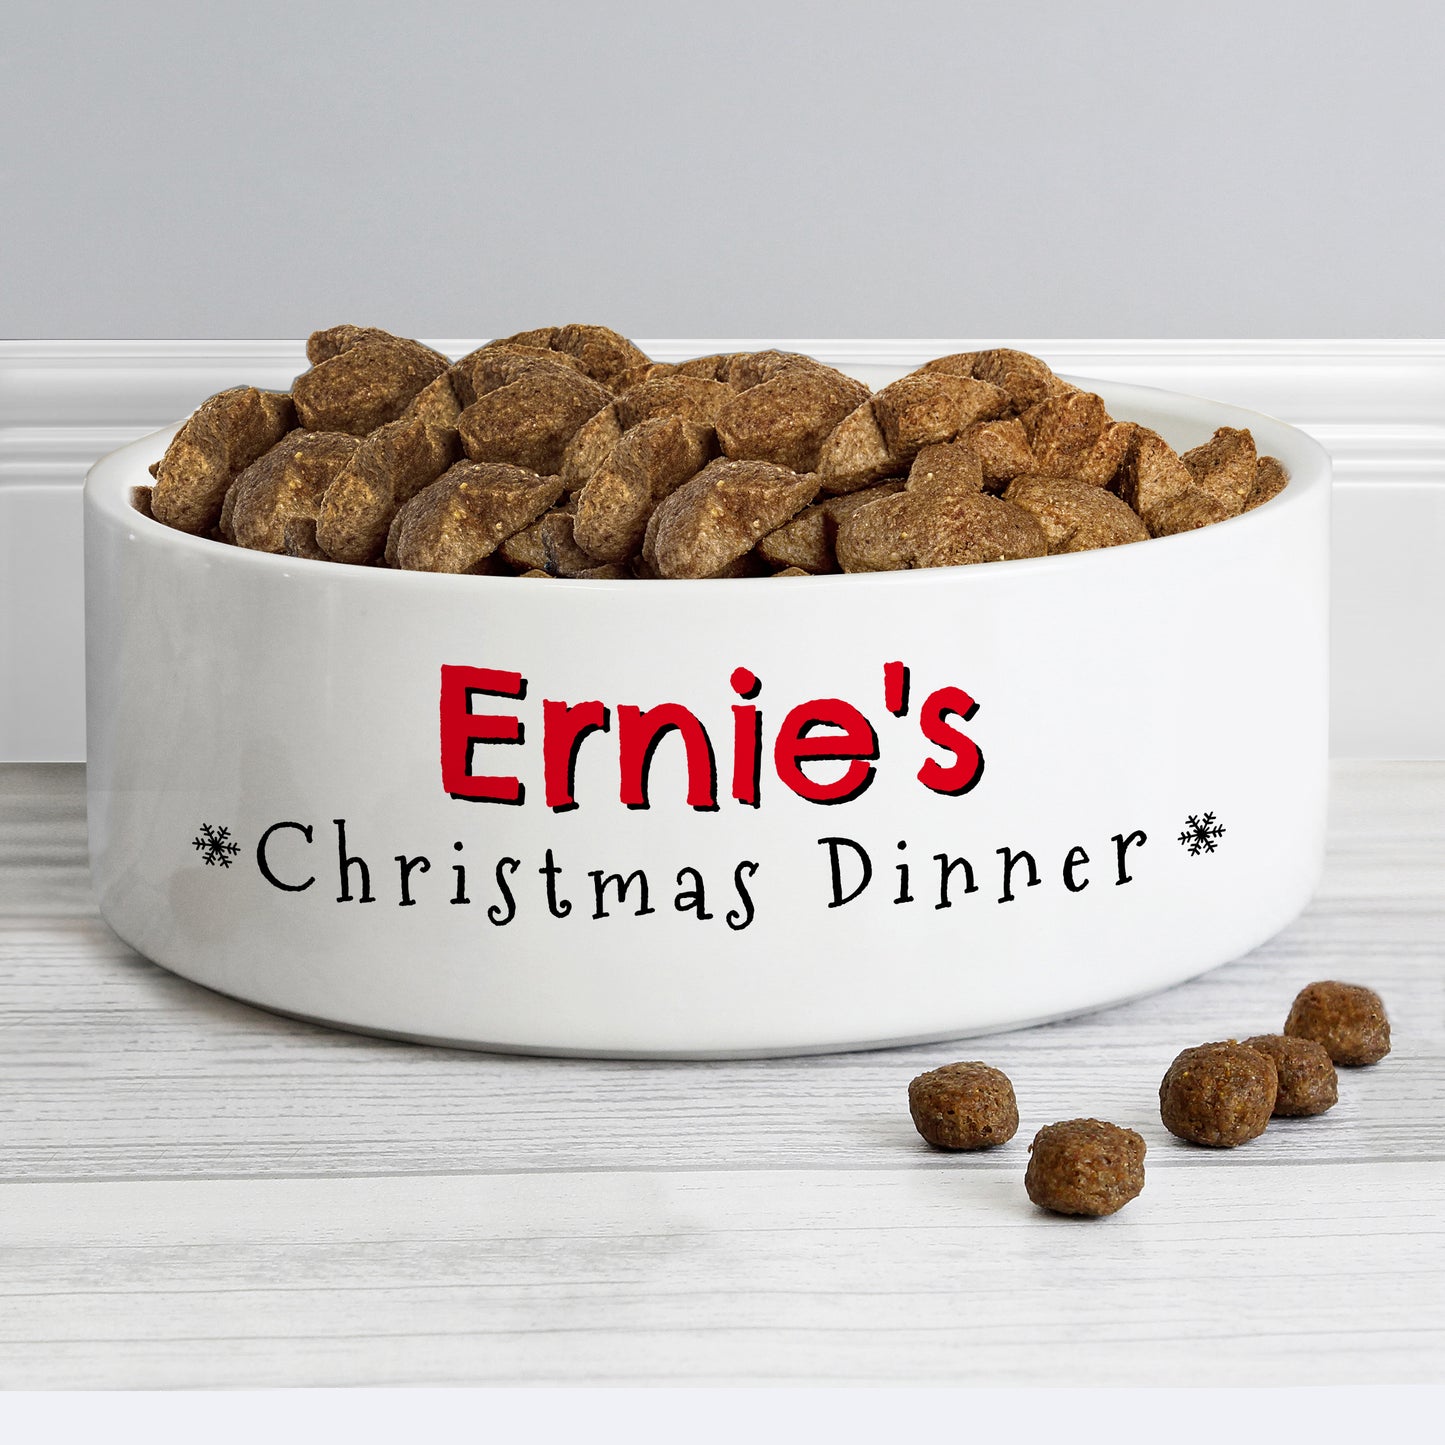 Personalised Christmas Dinner 14cm Medium Pet Bowl - Personalise It!